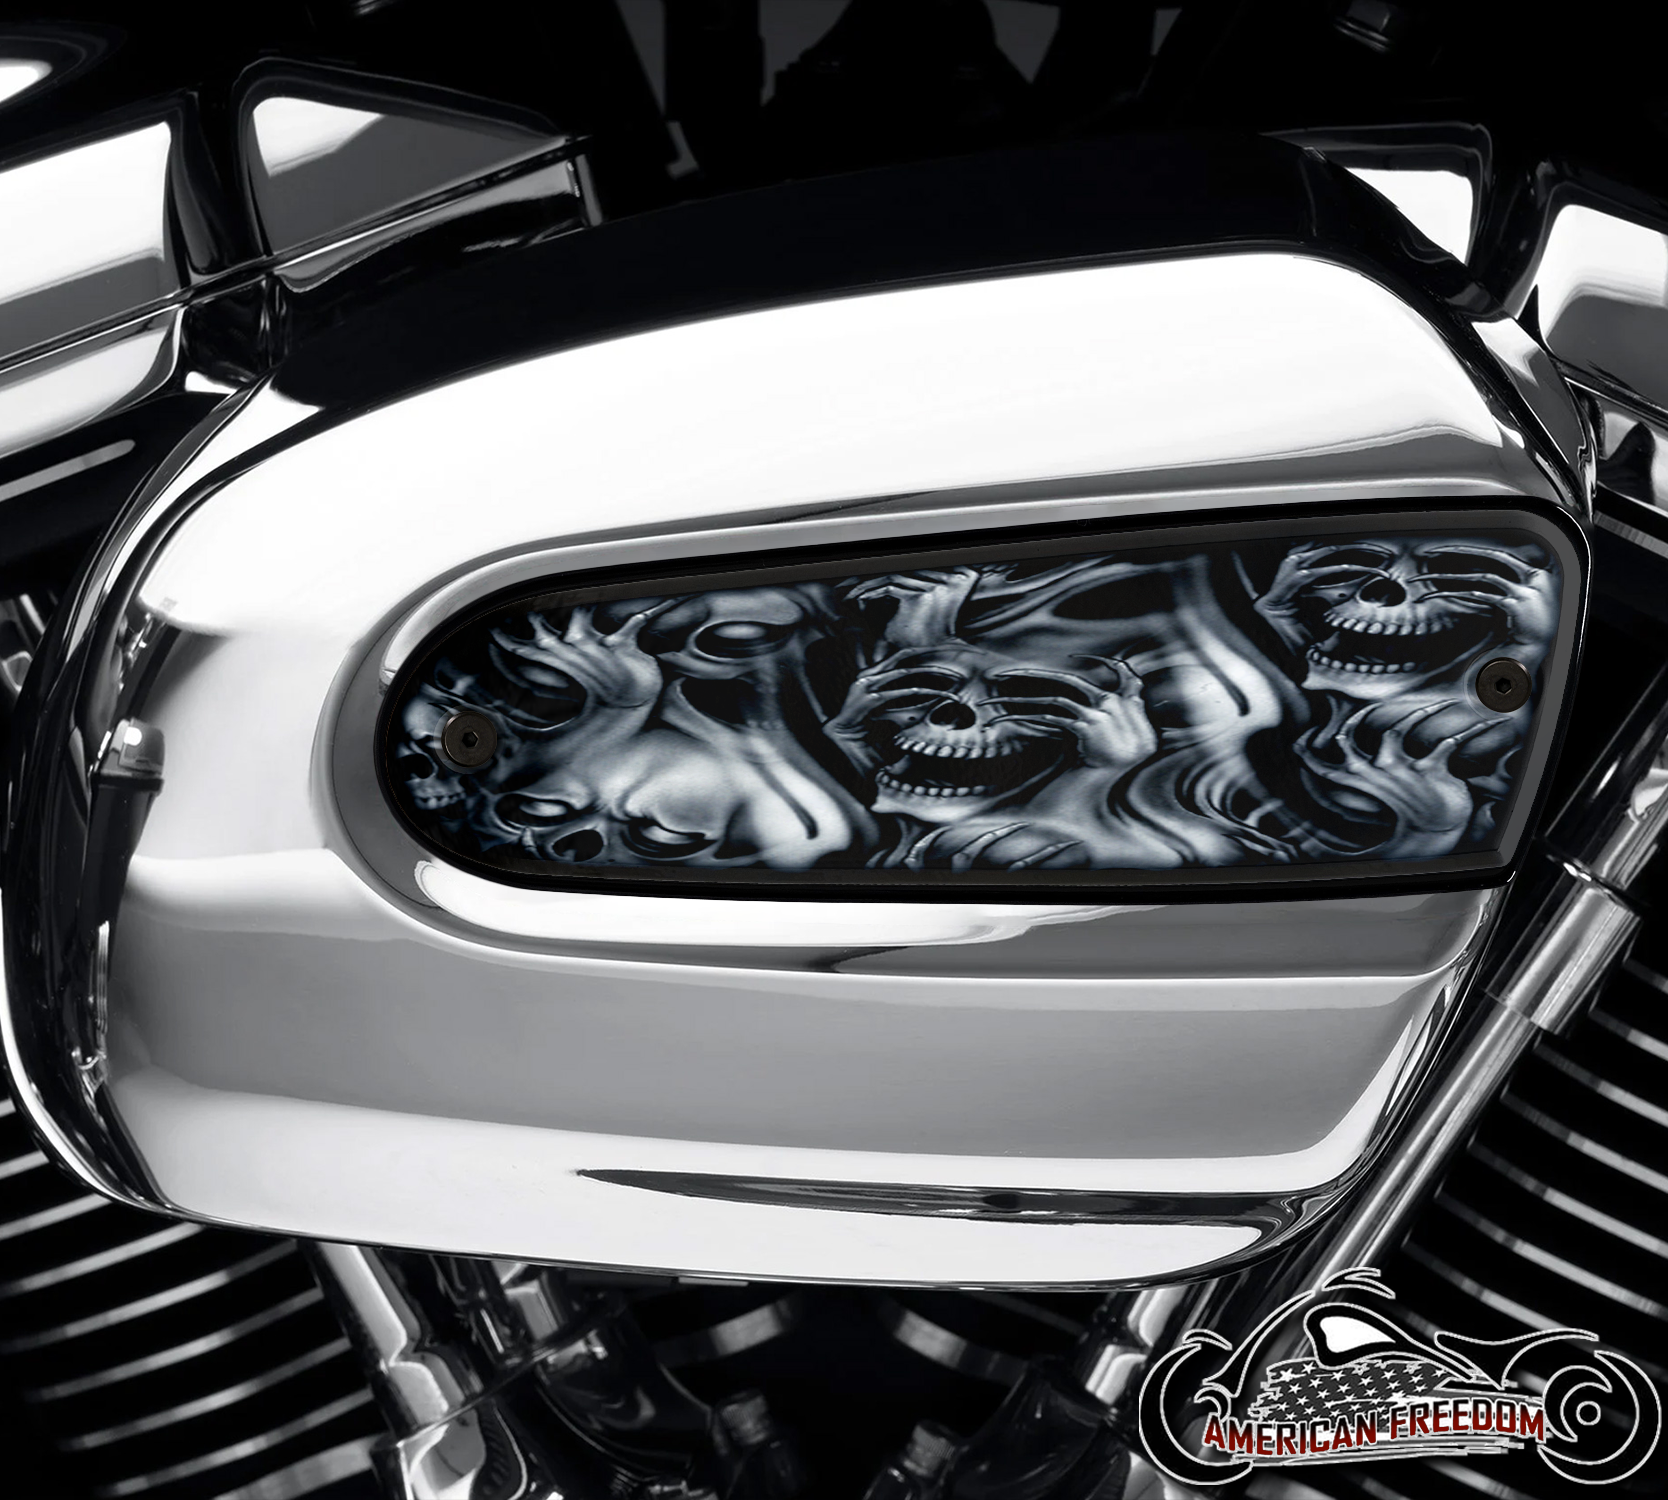 Harley Davidson Wedge Air Cleaner Insert - No Evil Skulls